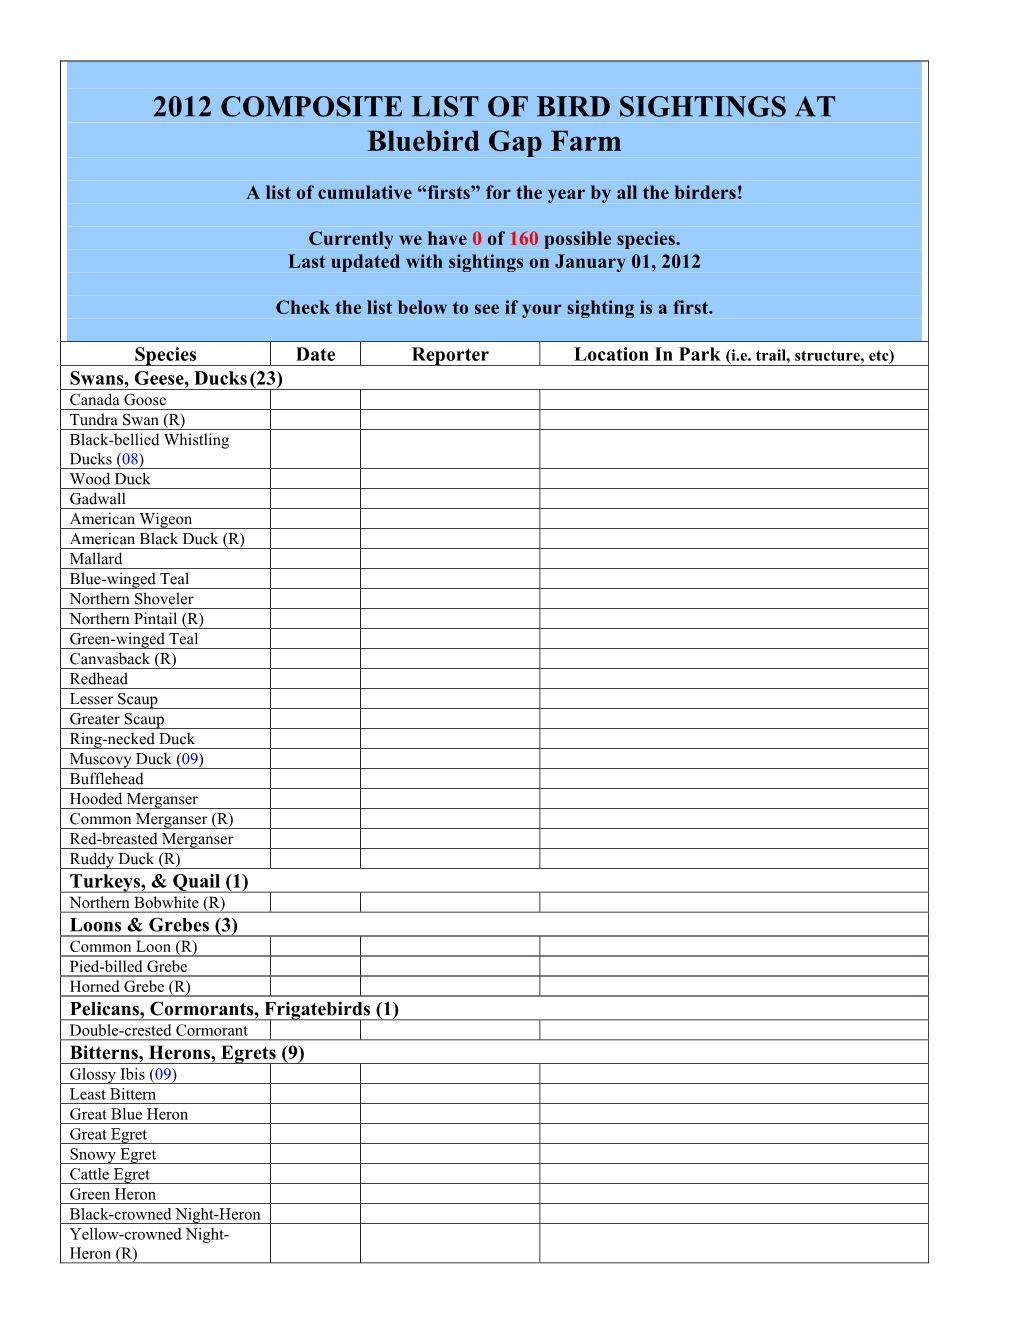 2012 COMPOSITE LIST of BIRD SIGHTINGS at Bluebird Gap Farm